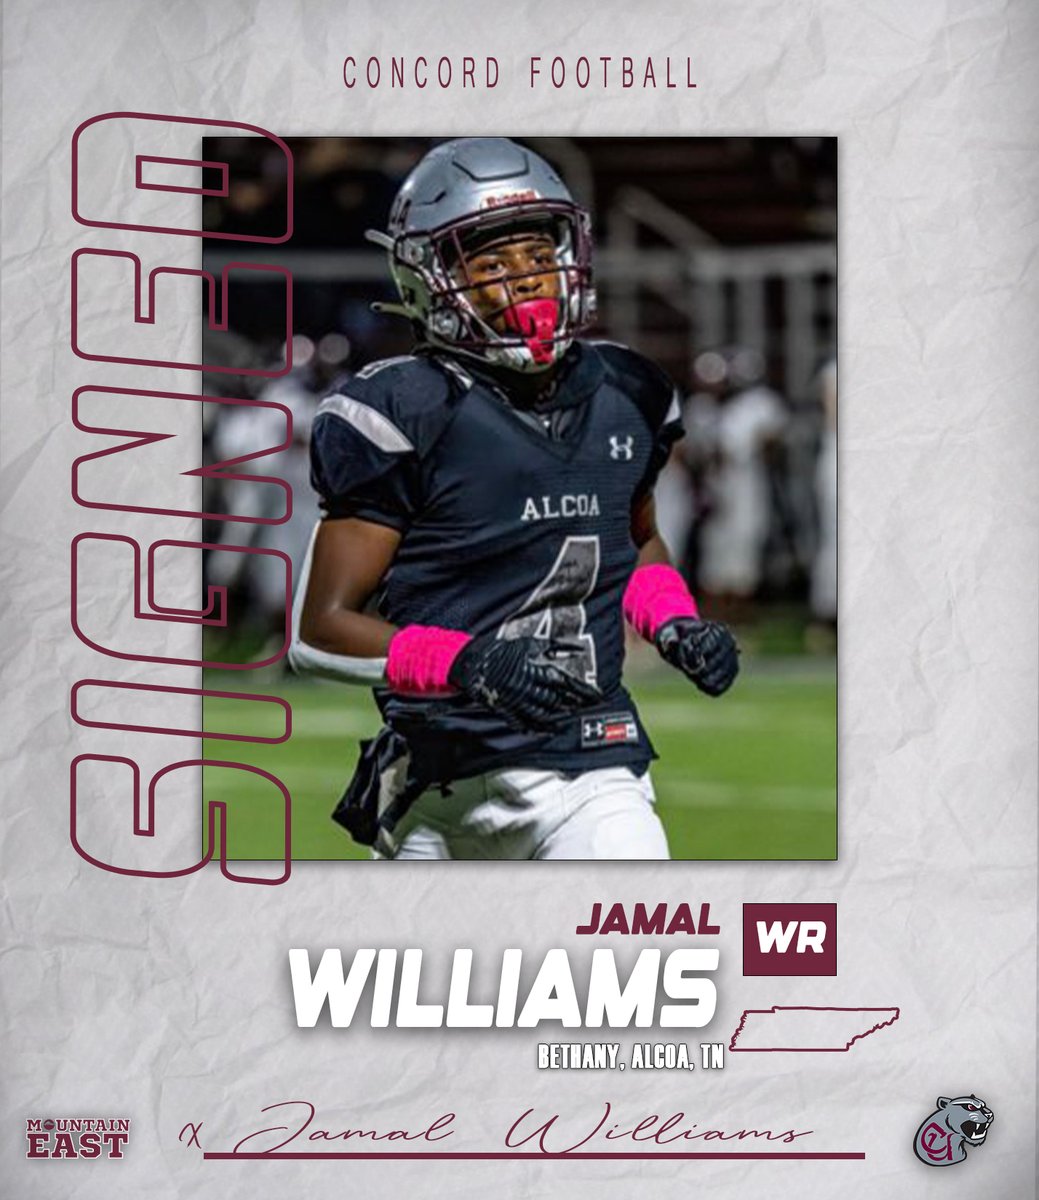 .@ConcordFootball Signee: Jamal Williams (Alcoa, Tenn., WR, Bethany College)